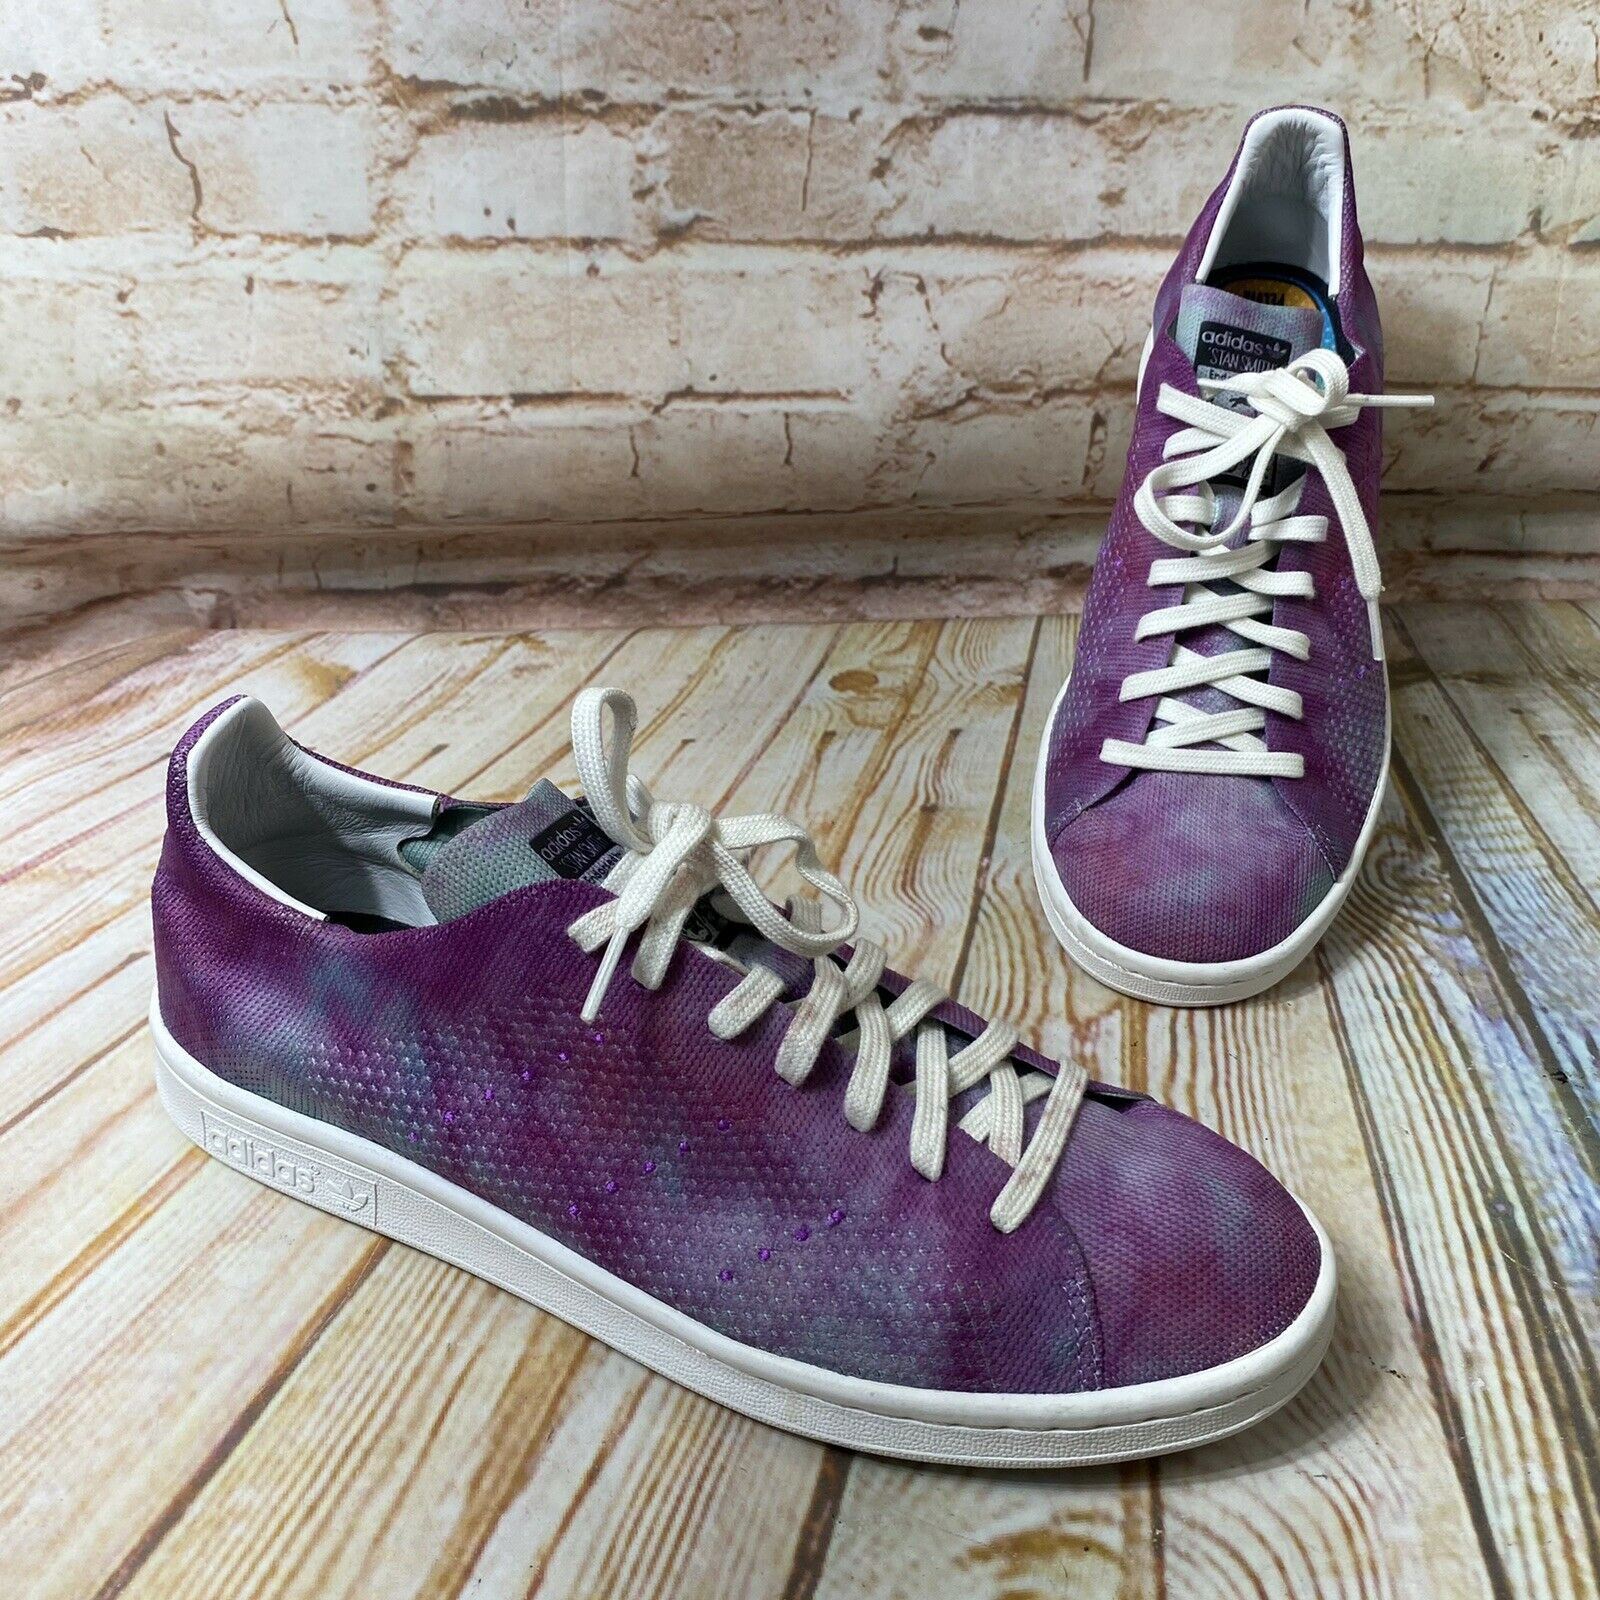 Adidas Pharrell Williams Hu Holi Men's Size 9.5 Purple Sneakers Shoes Athletic